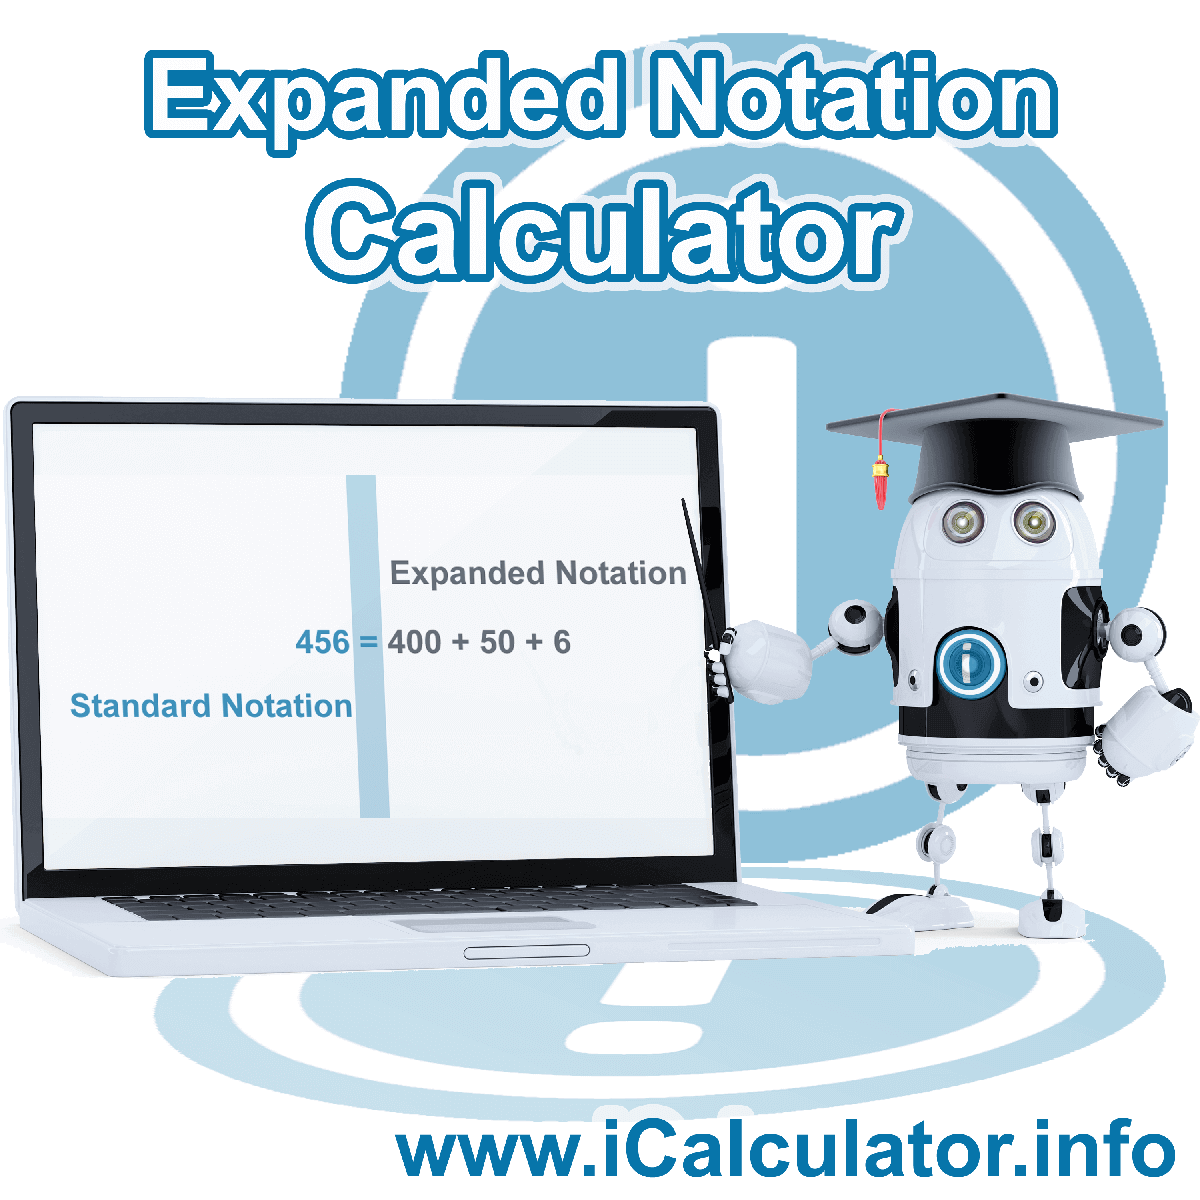 Standard Notation Calculator: This image shows Standard Notation formula and algorythms associated calculations used by the Standard Notation Conversion Calculator